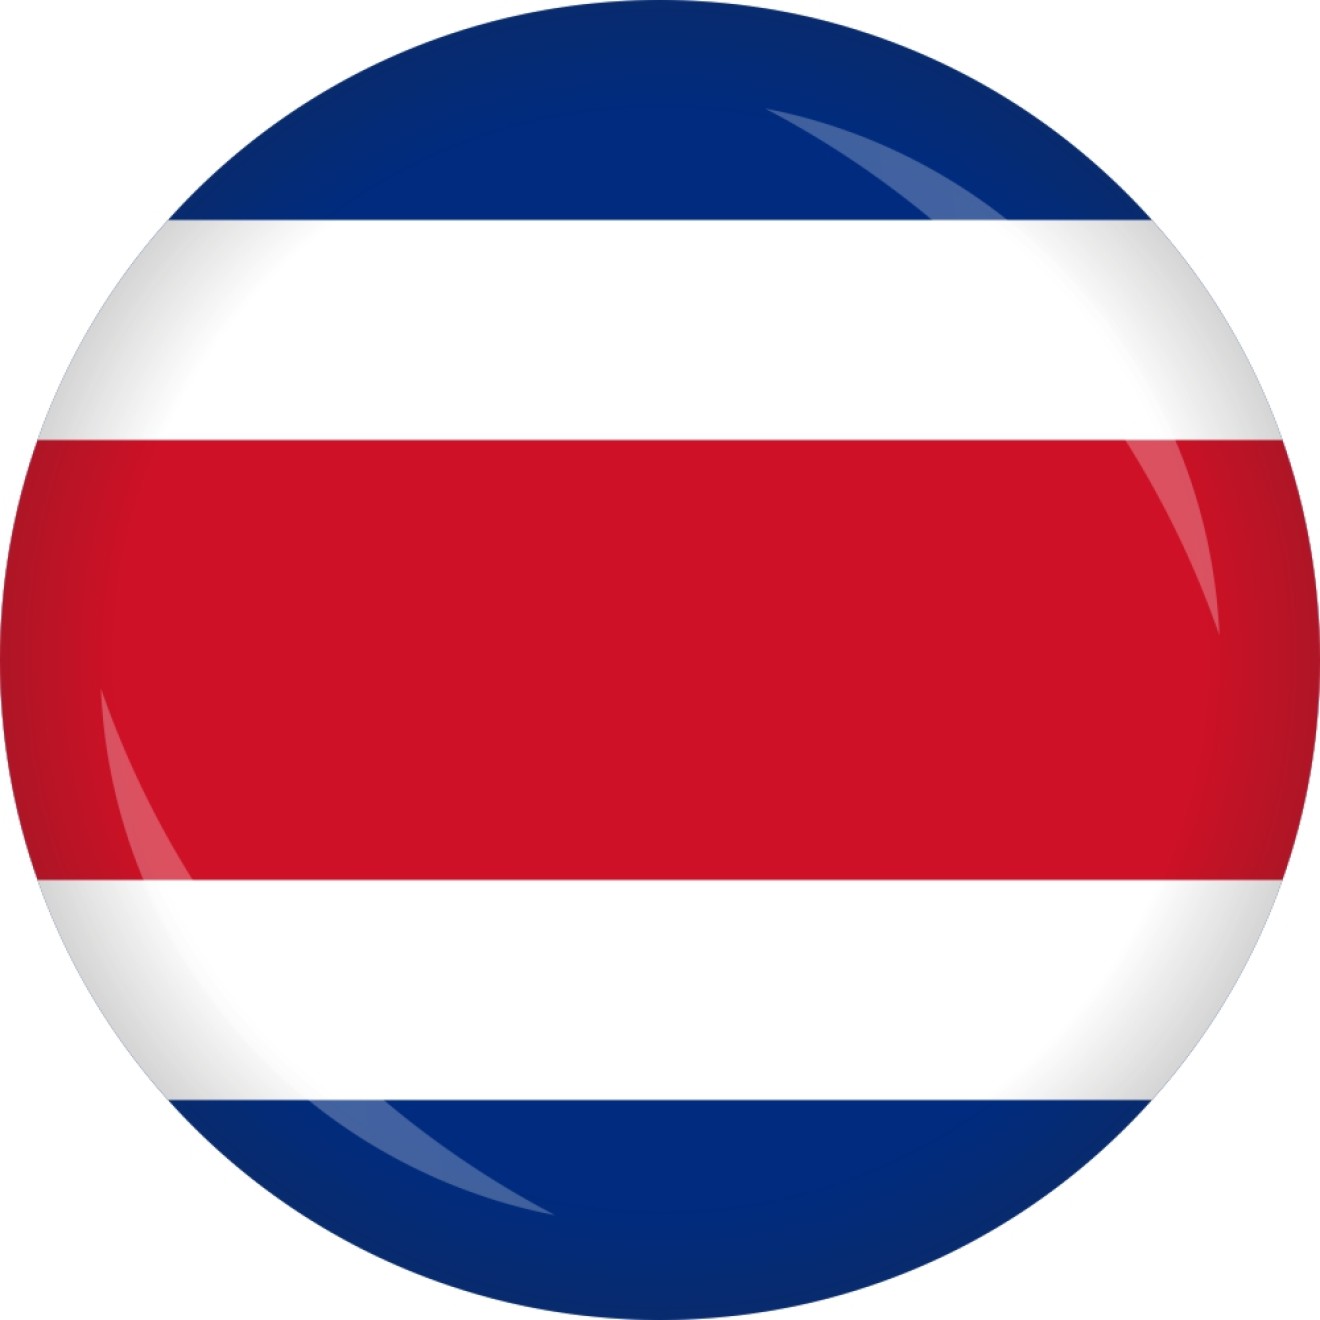 Button Costa Rica Flagge Ø 50 mm